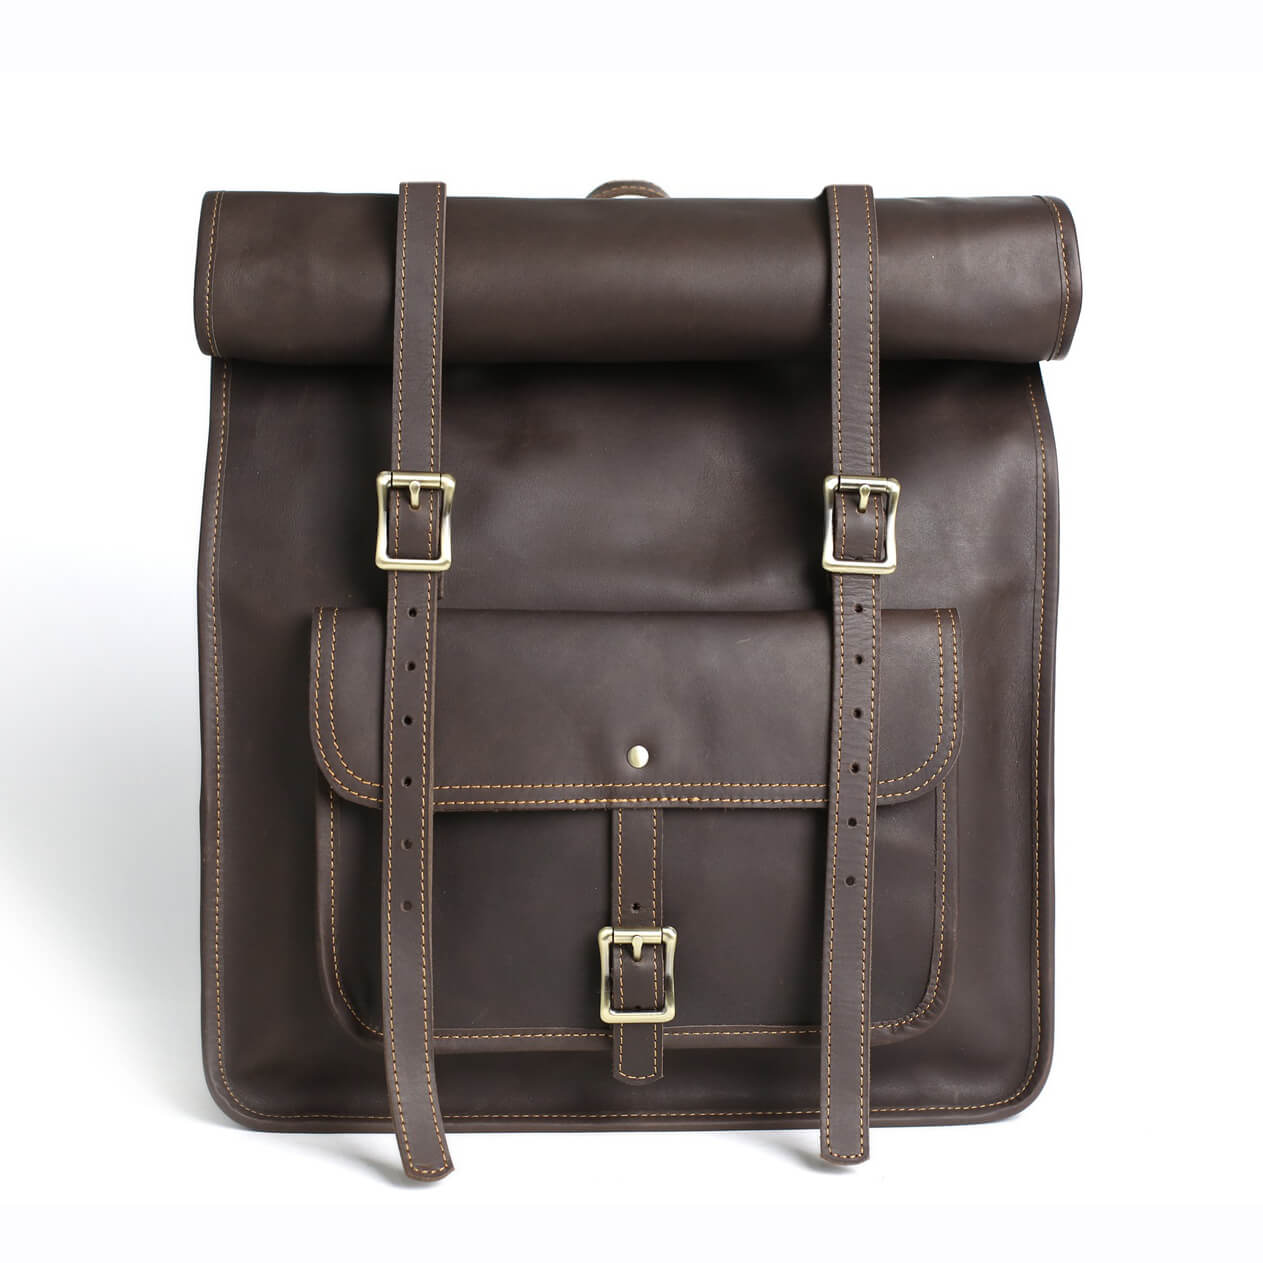 Original Design Full Grain Leather Backpack, Travelling Backpack, Handmade Laptop Backpack MG33